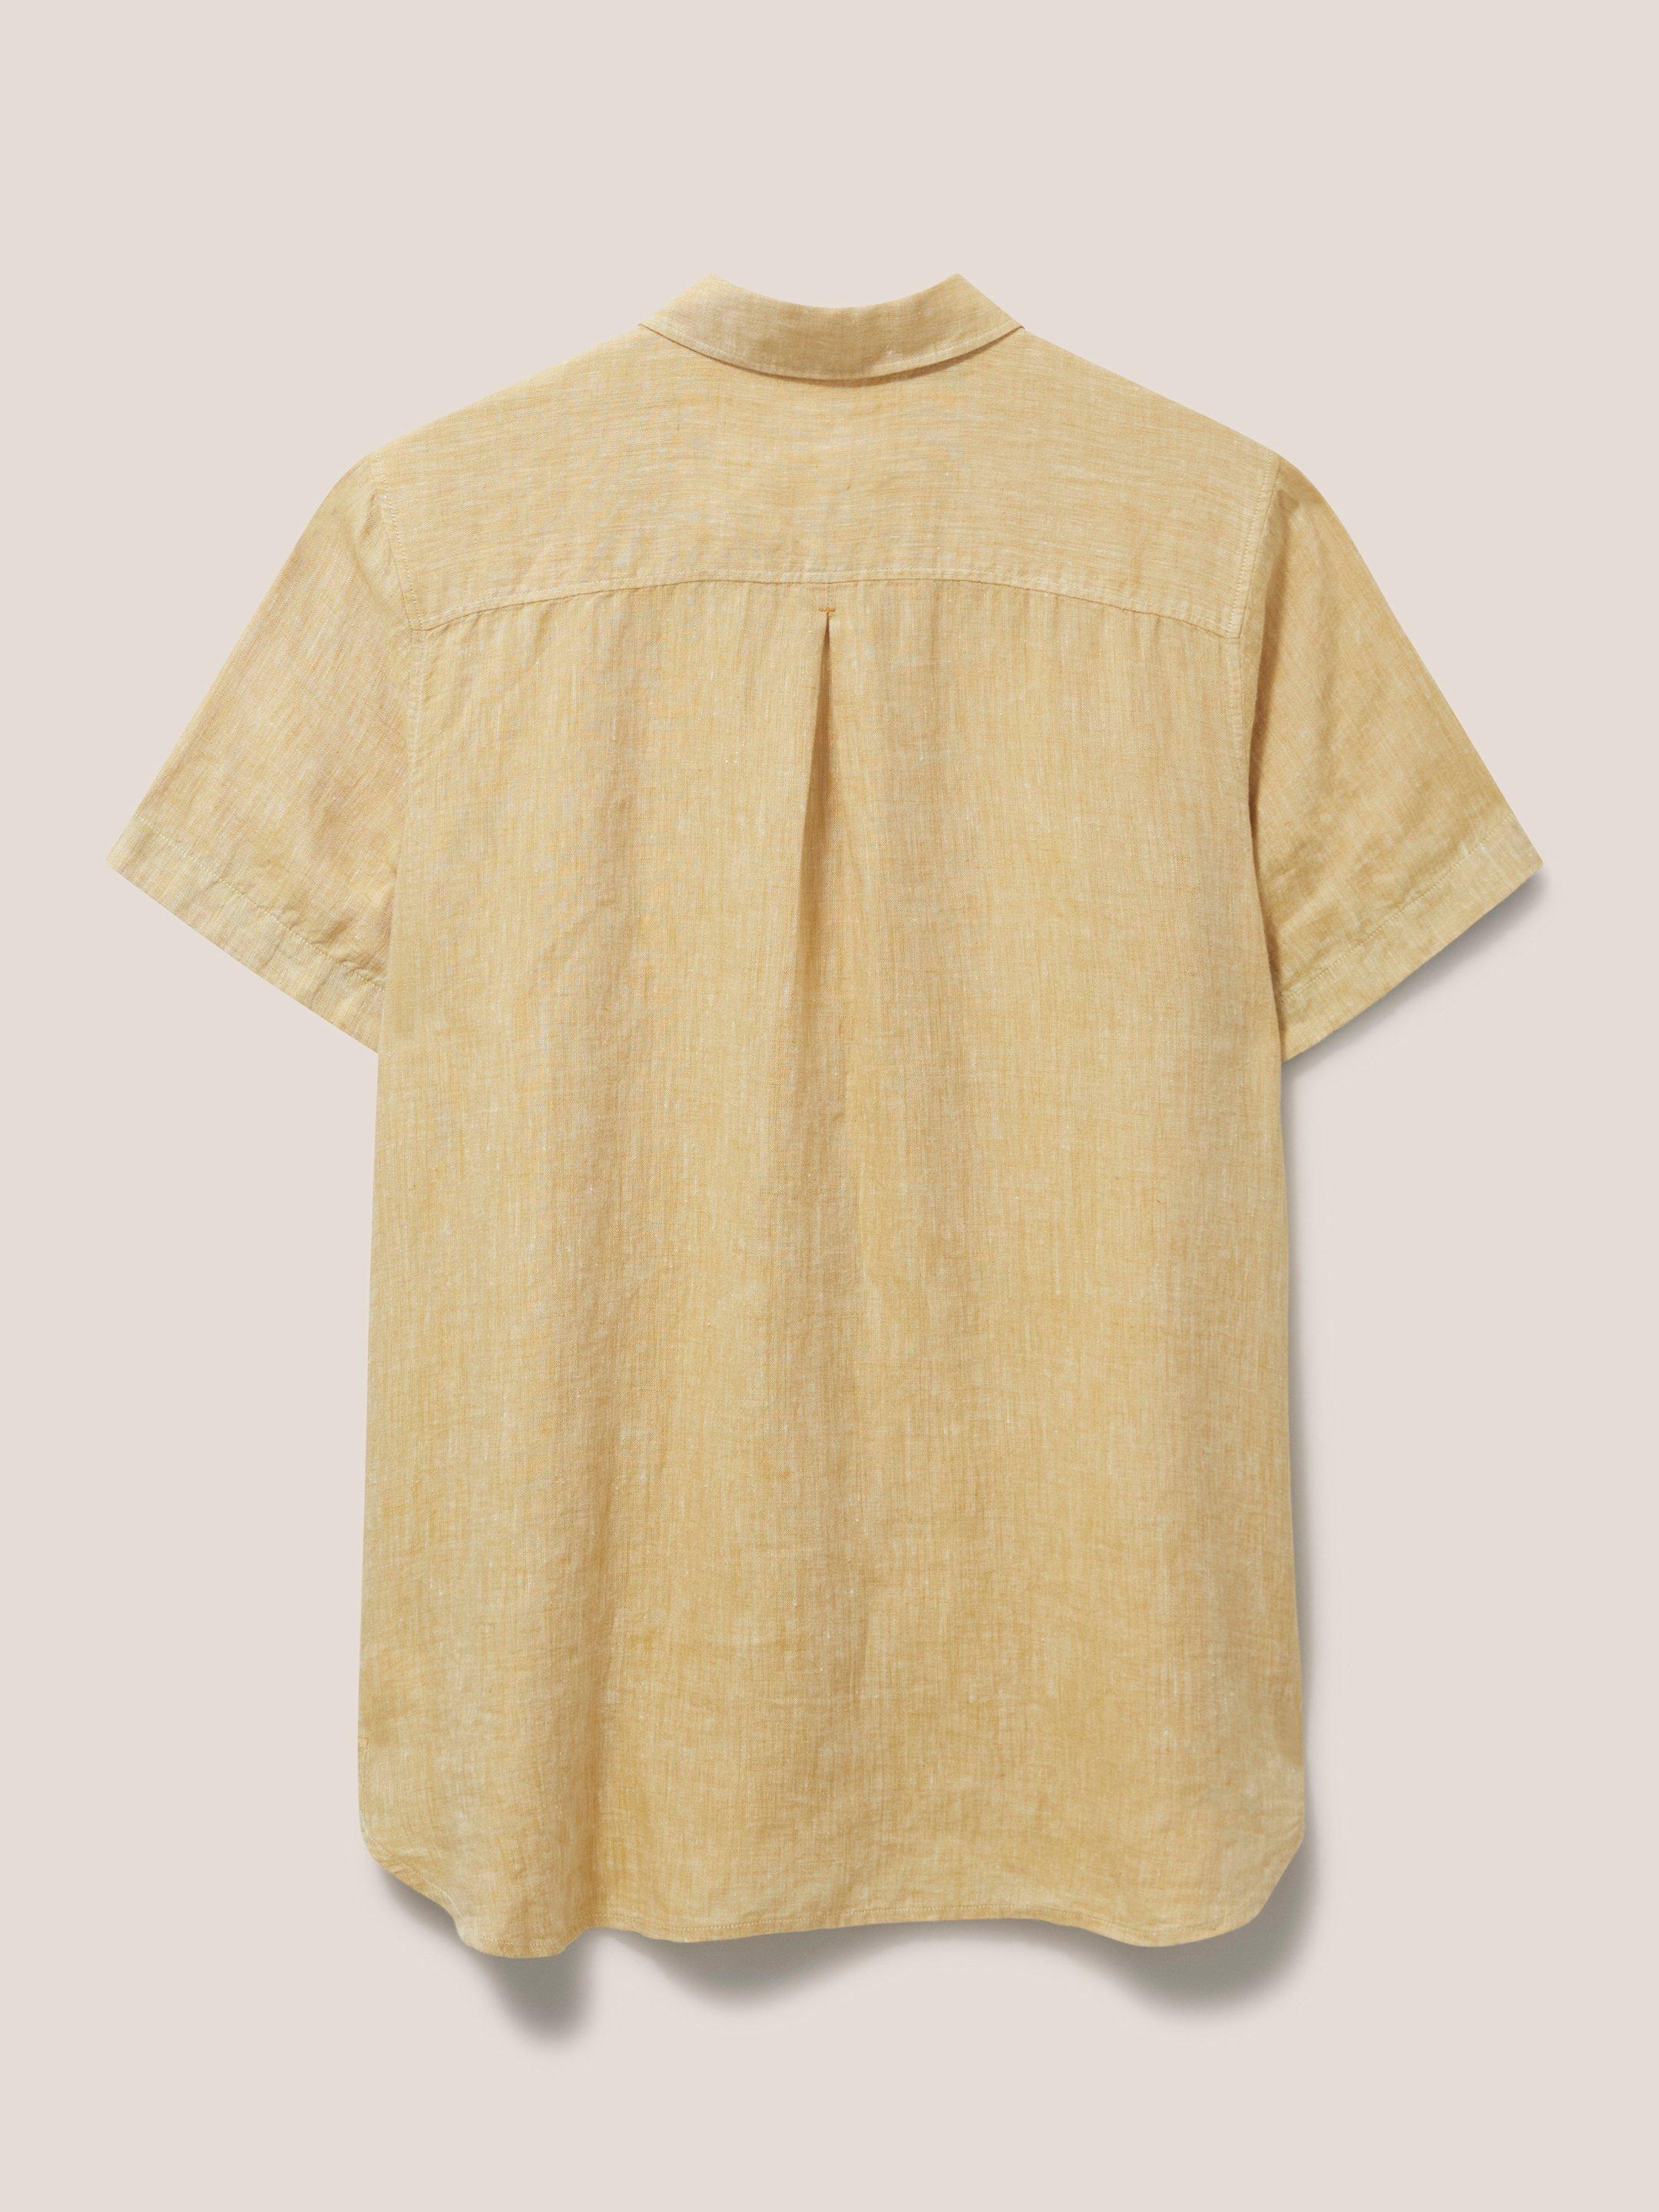 Pembroke SS Linen Shirt in DK YELLOW - FLAT BACK